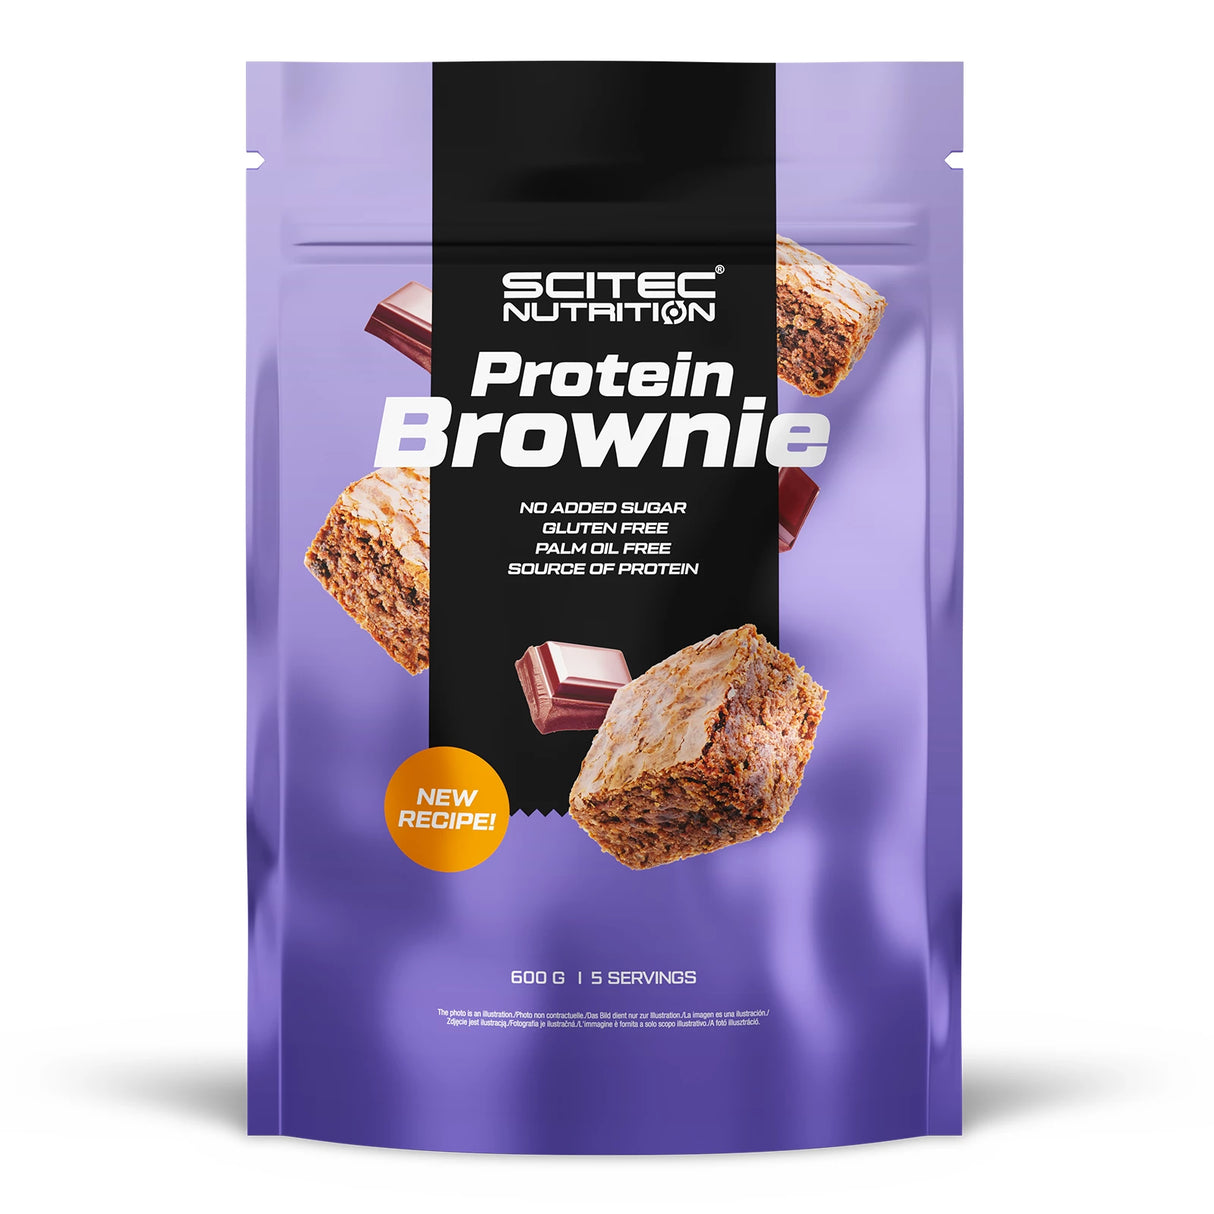 PROTEIN BROWNIE - 600G Scitec Nutrition